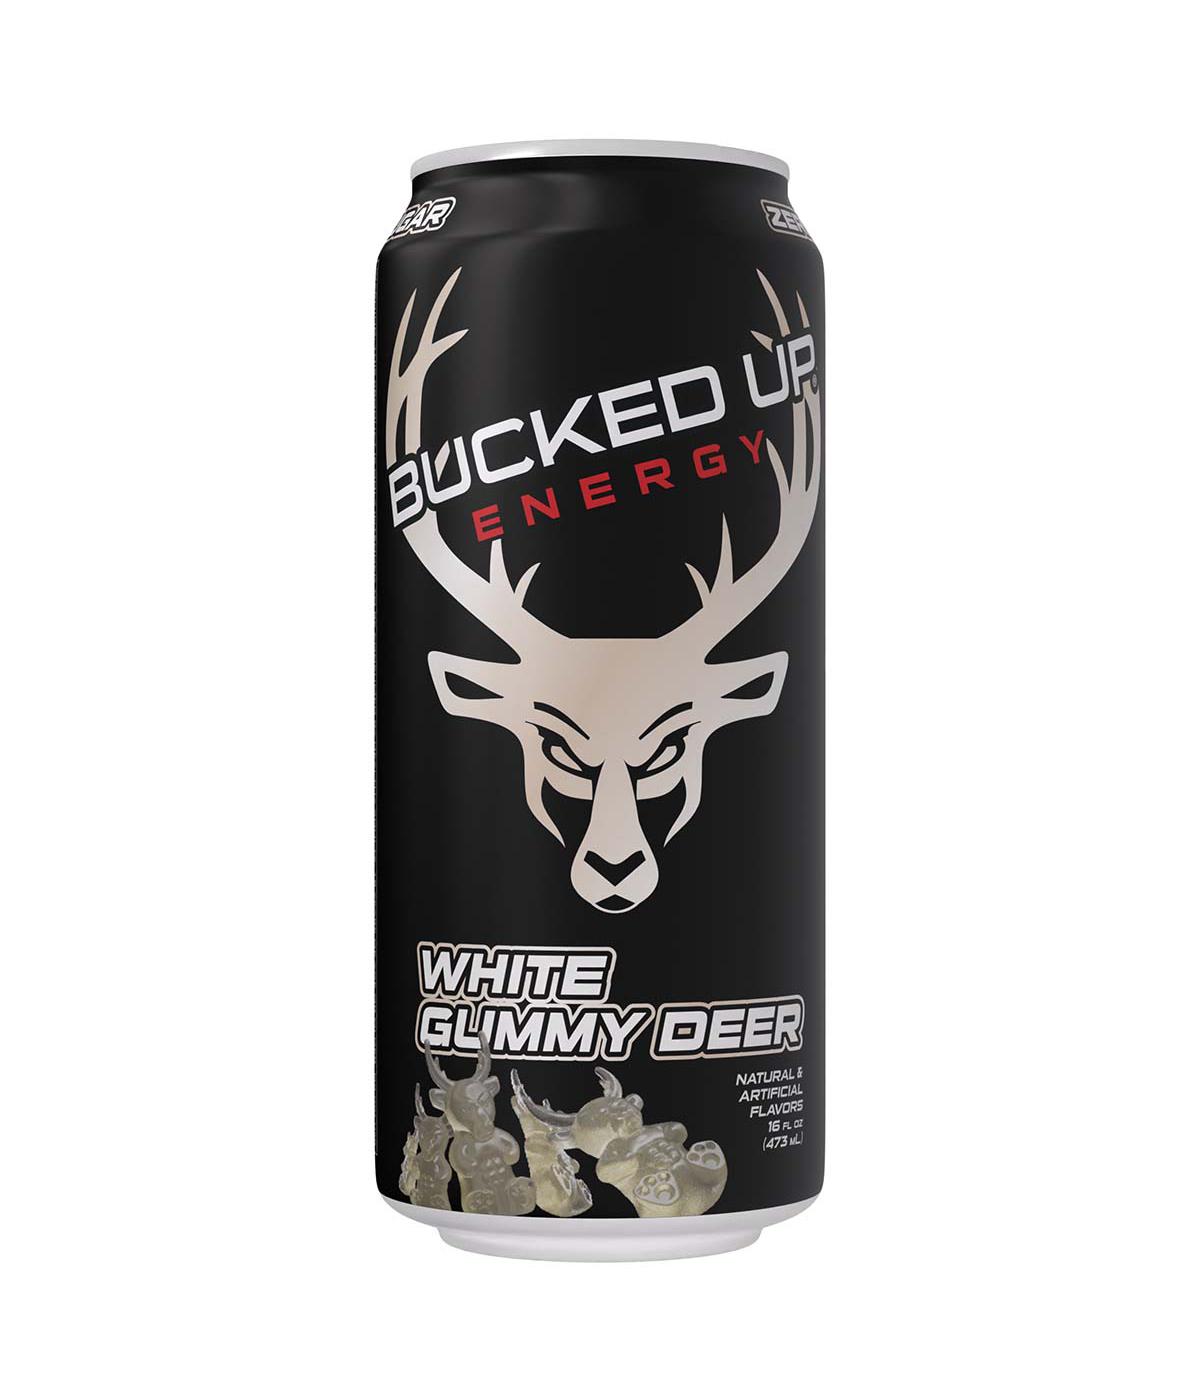 Bucked Up Zero Sugar Energy Drink - White Gummy Deer; image 1 of 4